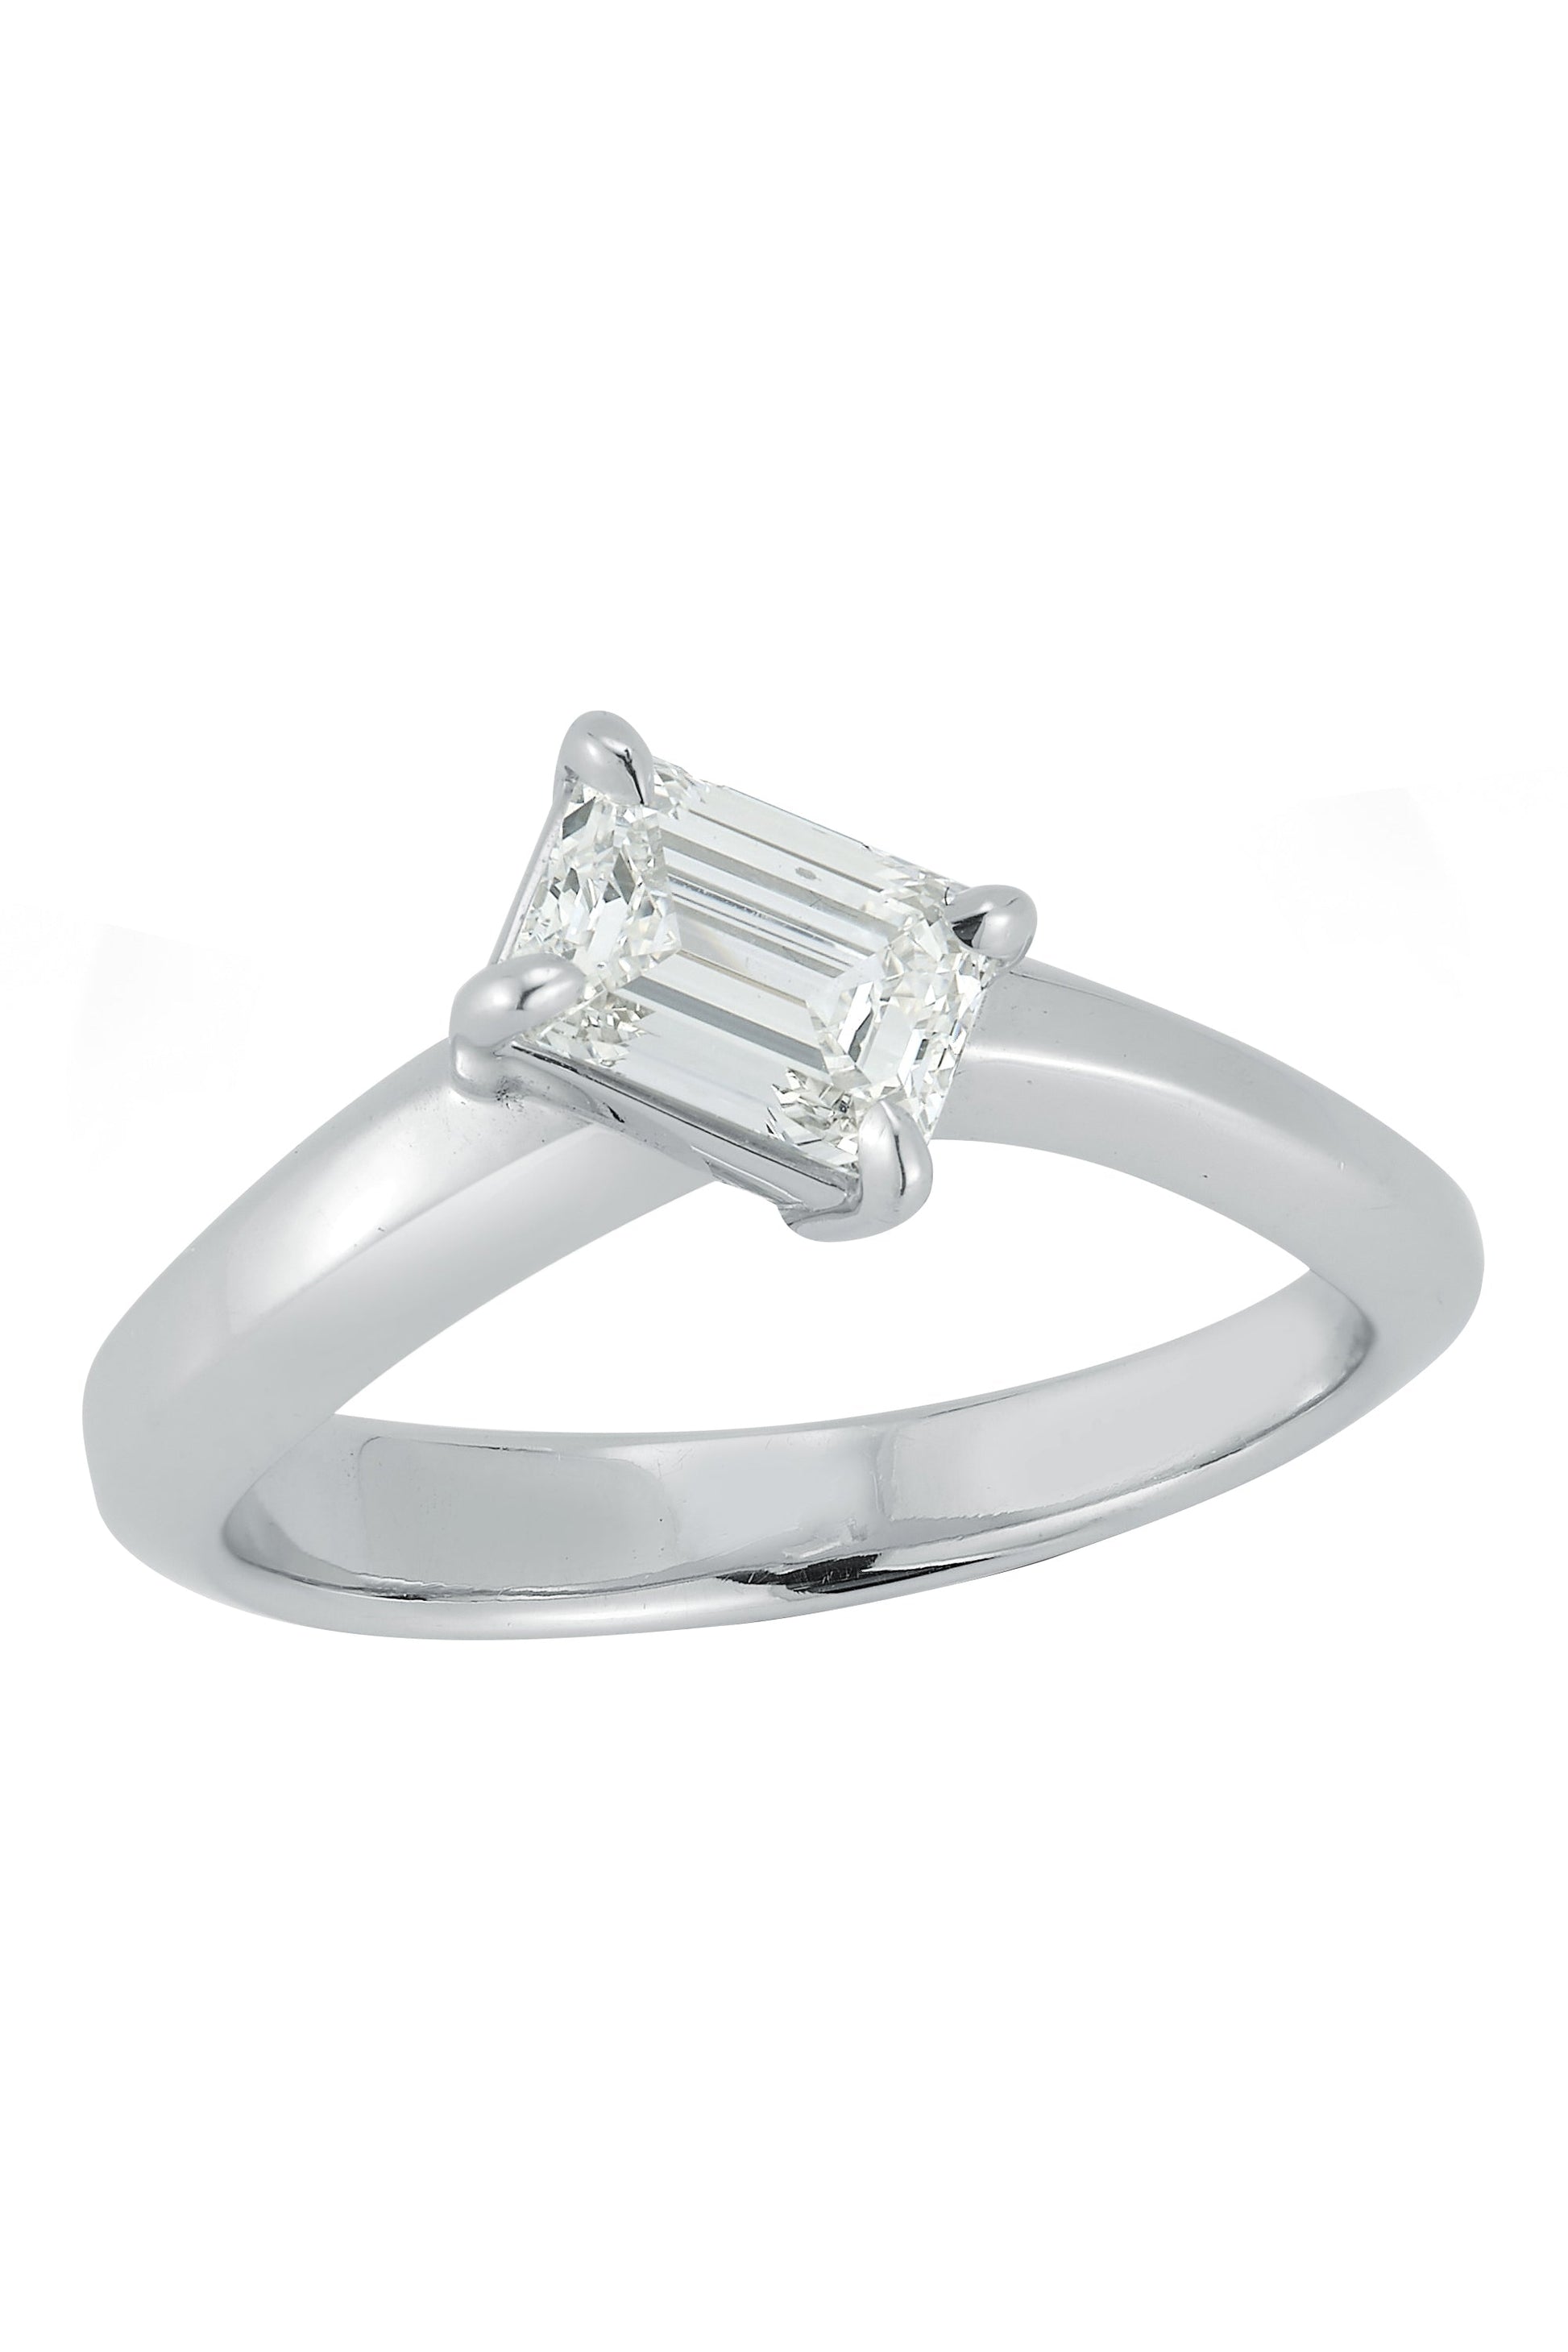 LORRAINE WEST-Wave 2 Emerald Cut Diamond Ring-PLATINUM